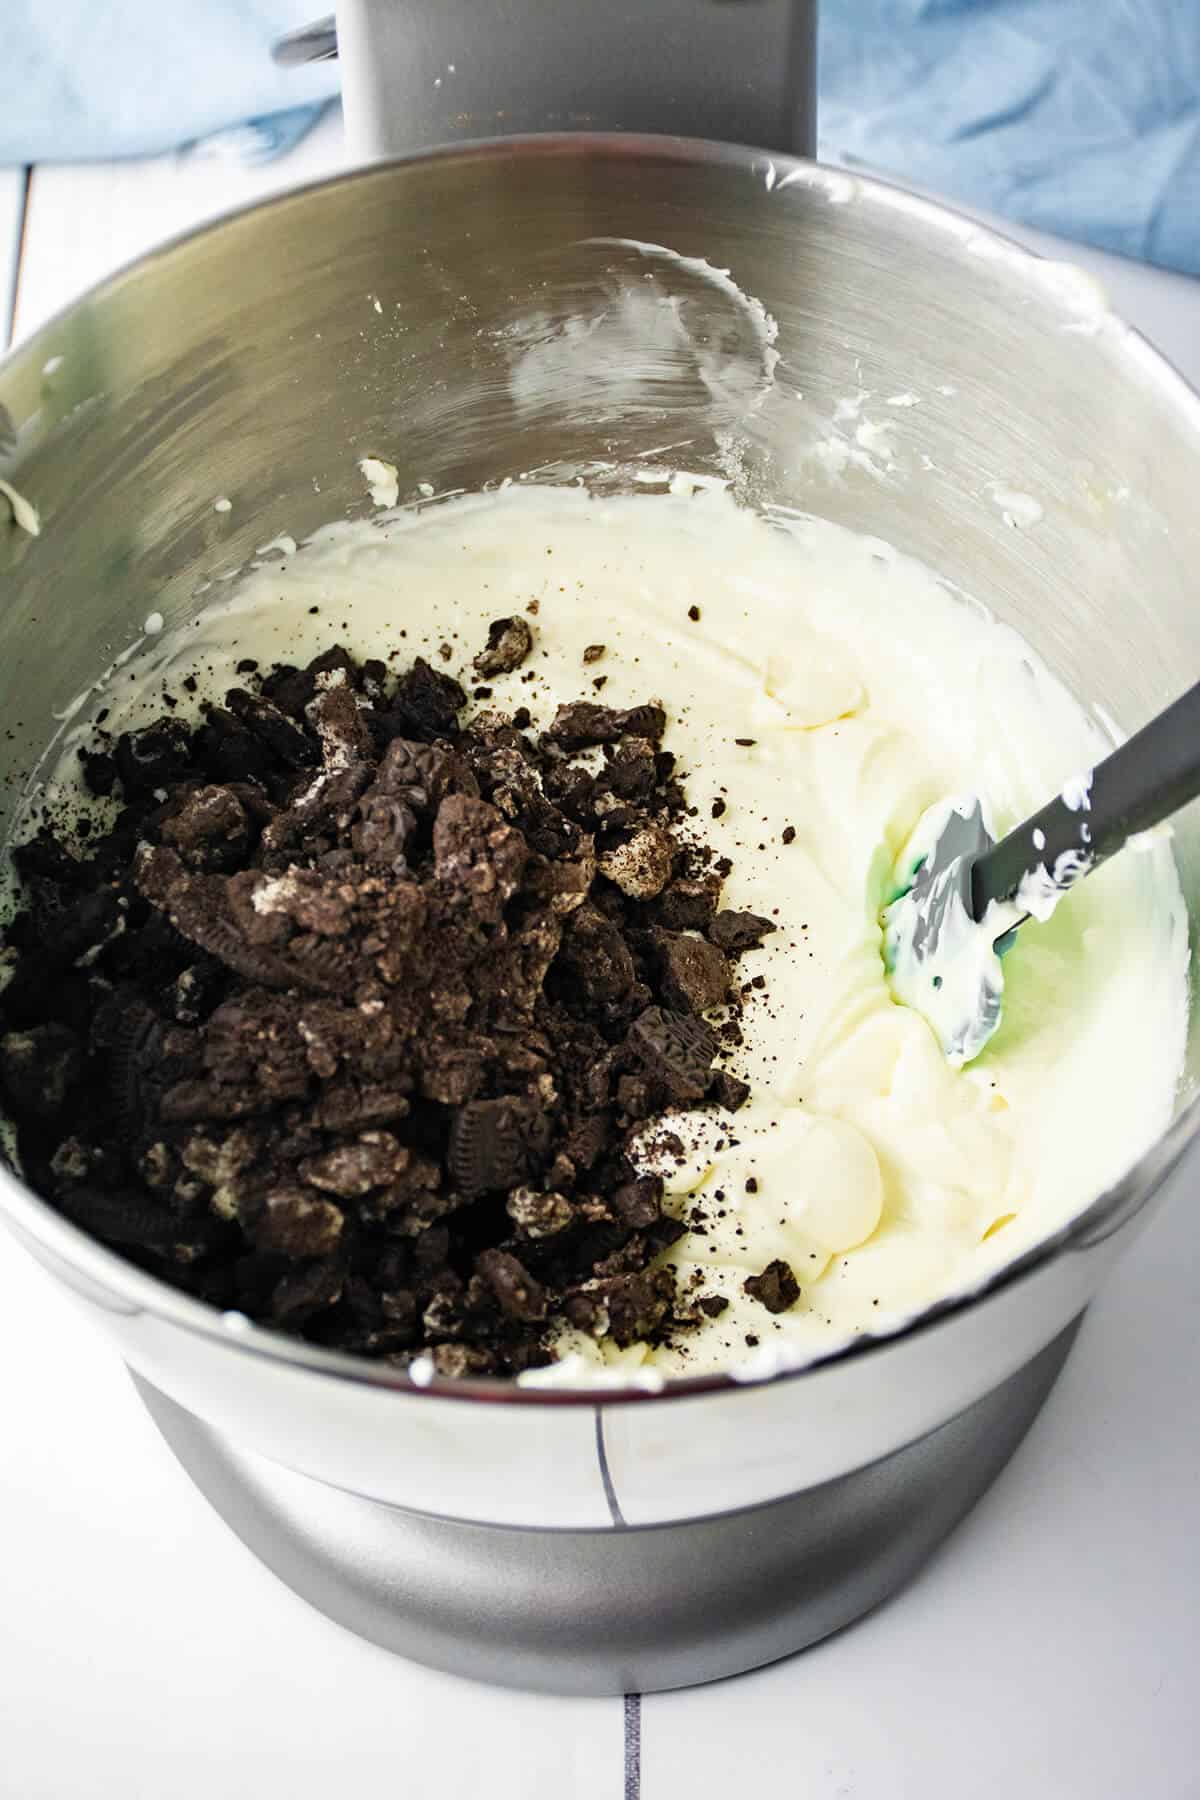 Adding crushed oreos to mixture.